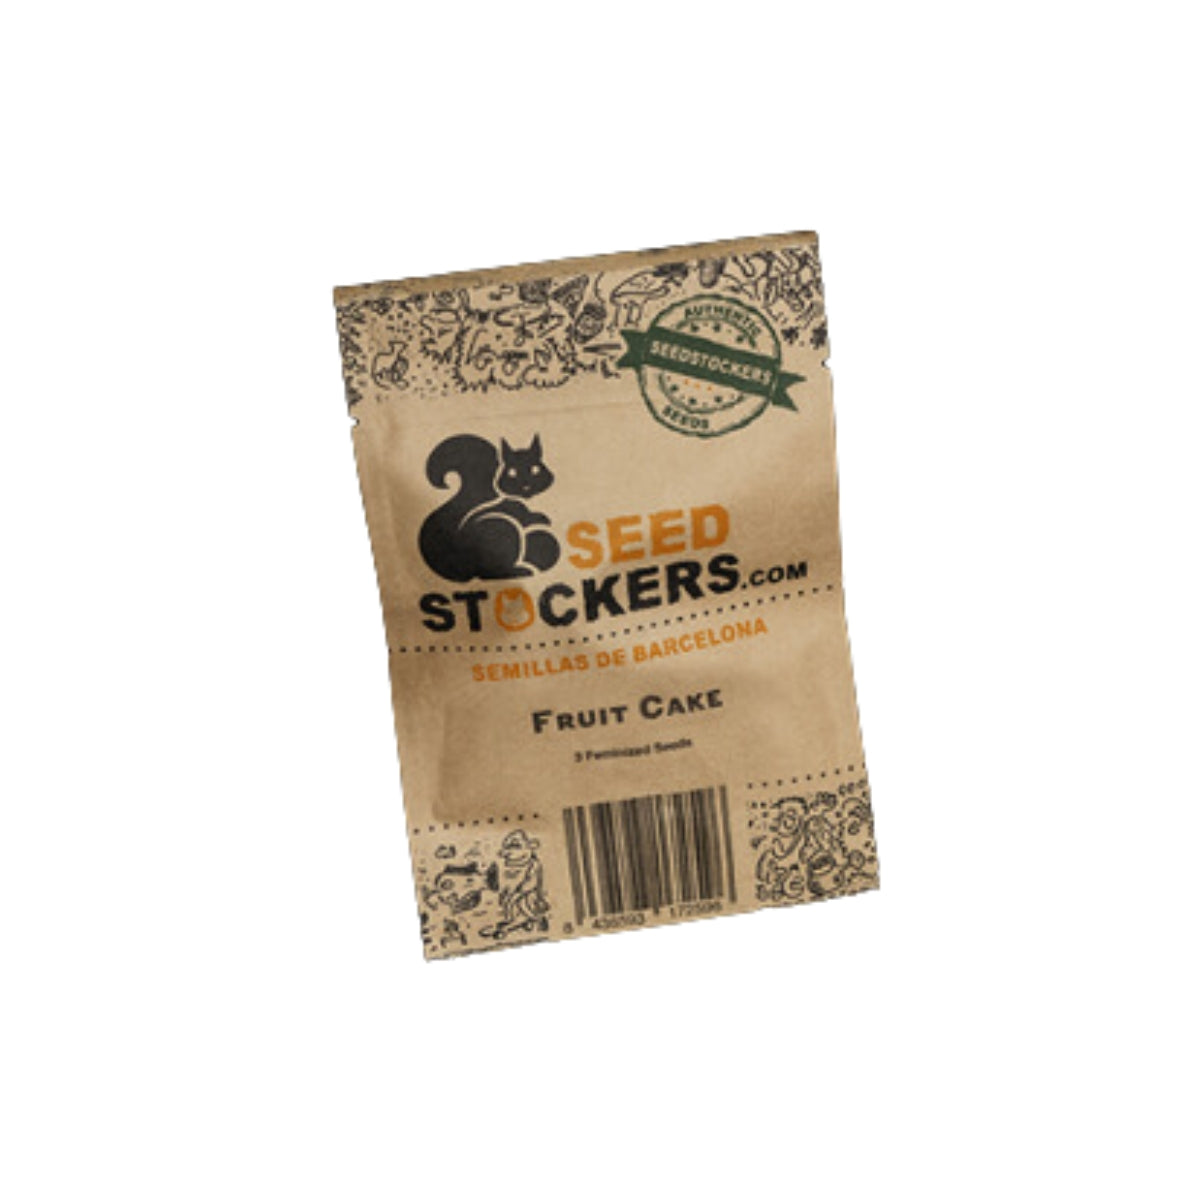 Fruit Cake Feminizada - Seed Stockers - Pack x 3